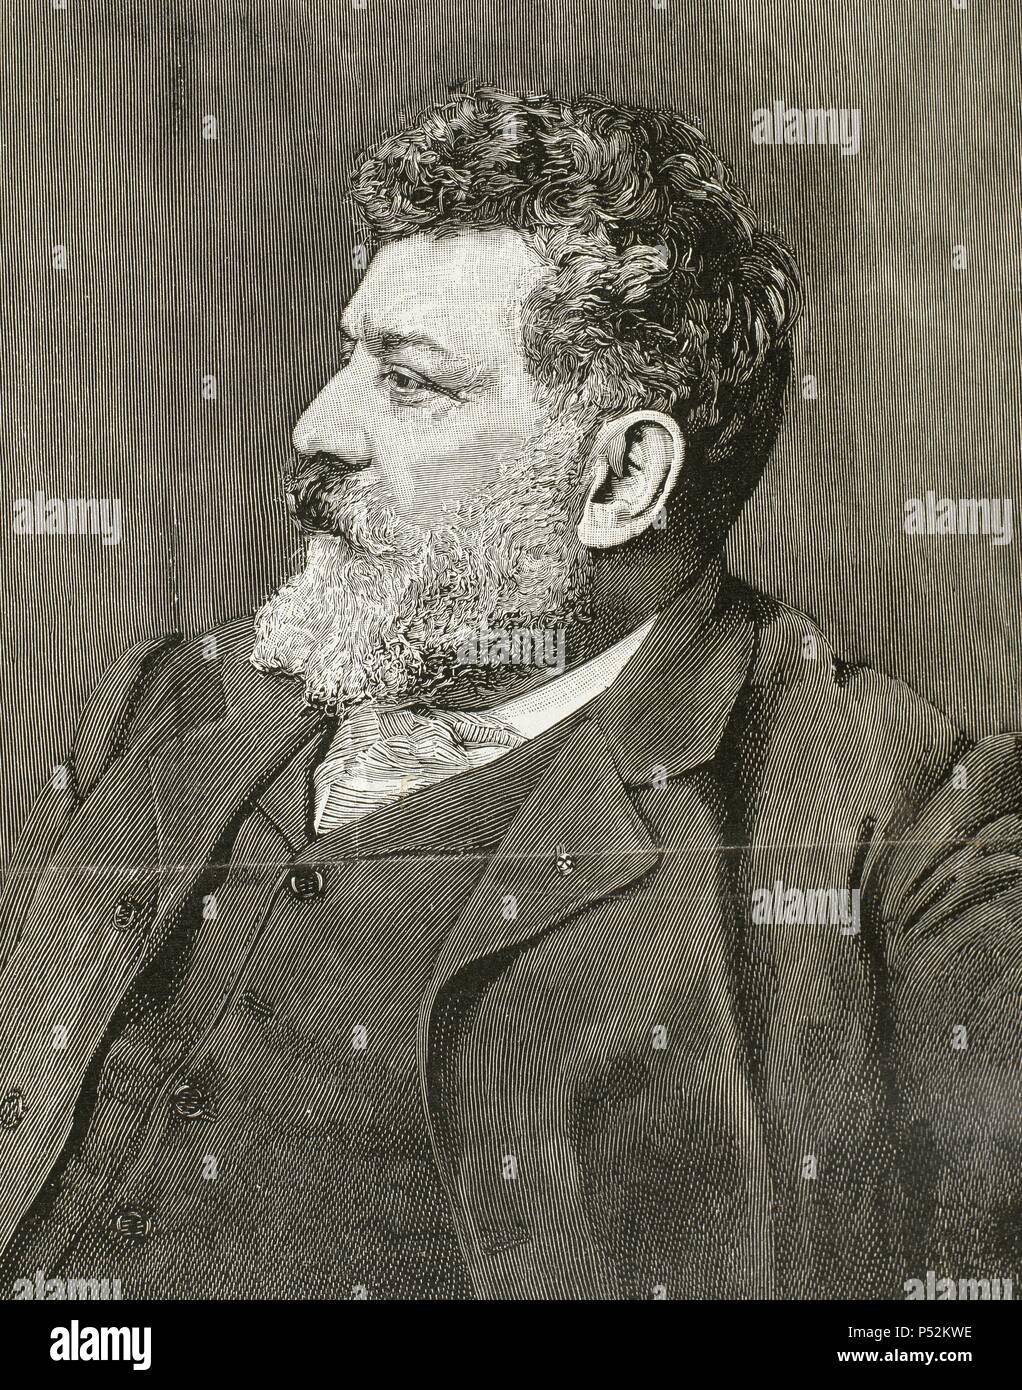 Francisco Domingo Marques (1842-1920). Spanischer Maler. Eclictic Stil. Porträt. Gravur. des 19. Jahrhunderts. Stockfoto